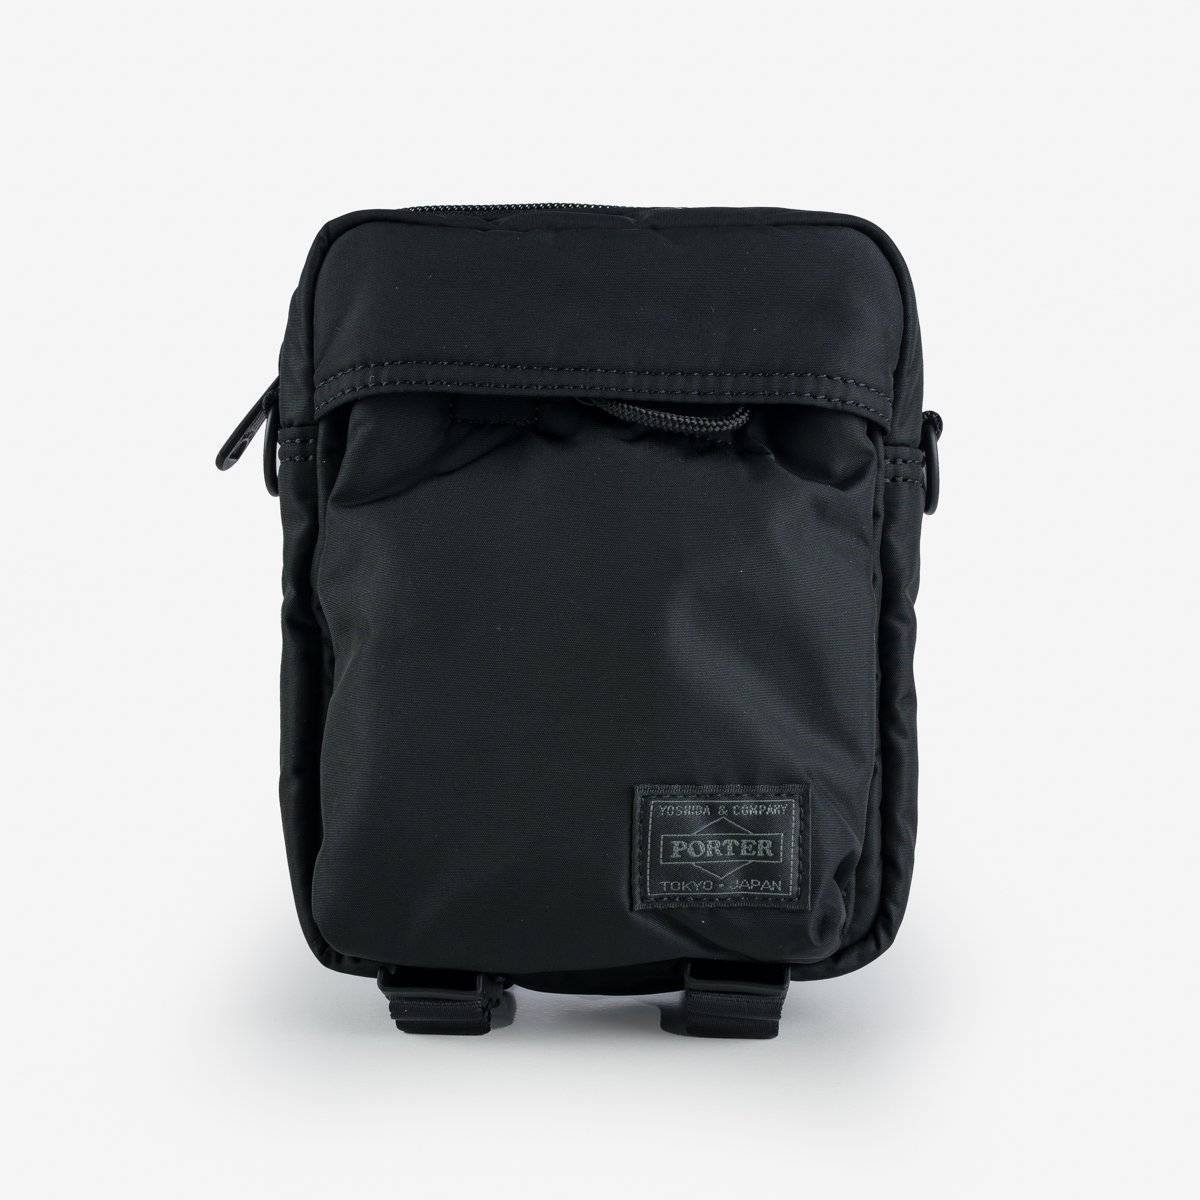 Porter - Yoshida & Co. - Senses 2Way Shoulder Bag - Black